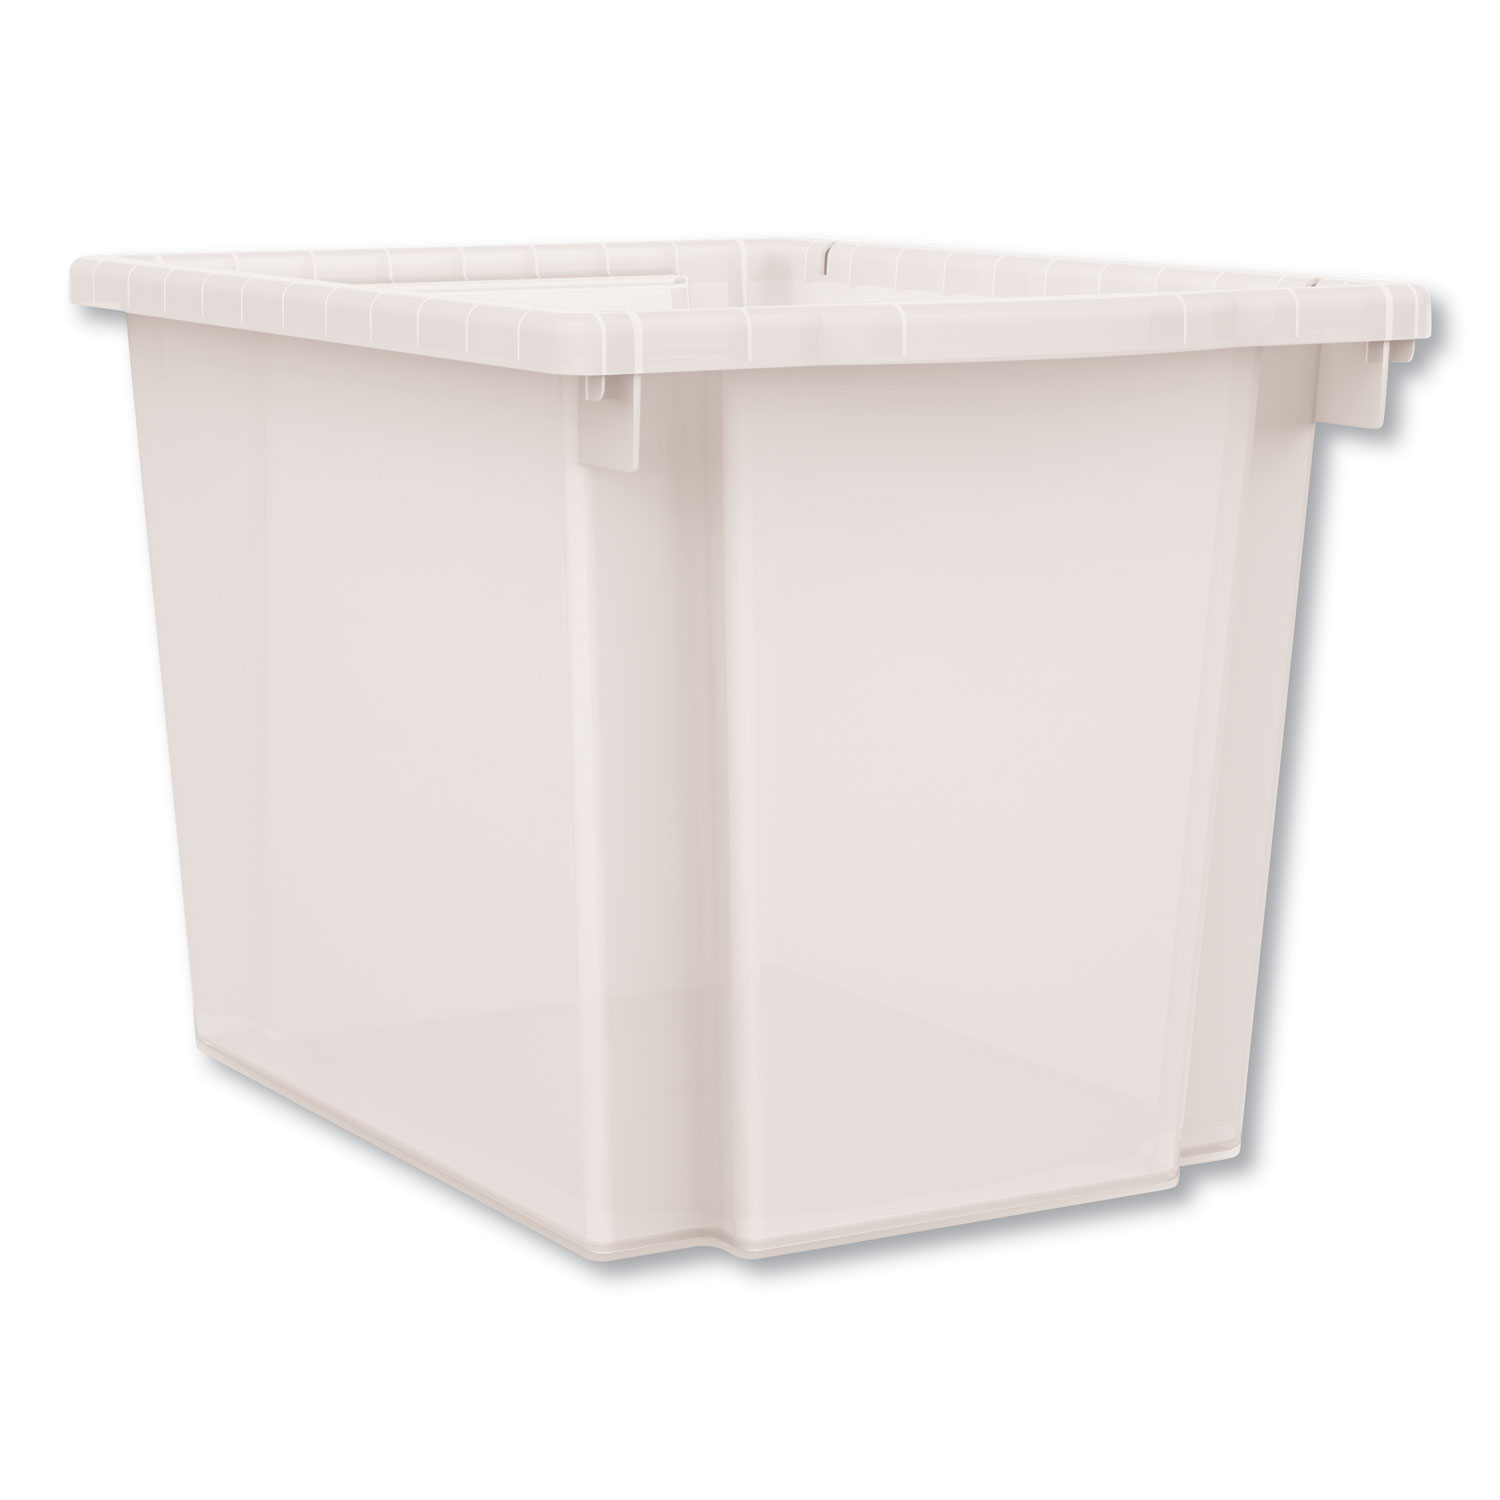 HON® Flagship Storage Bins, 3 Sections, 12.75 x 16 x 12, Translucent White